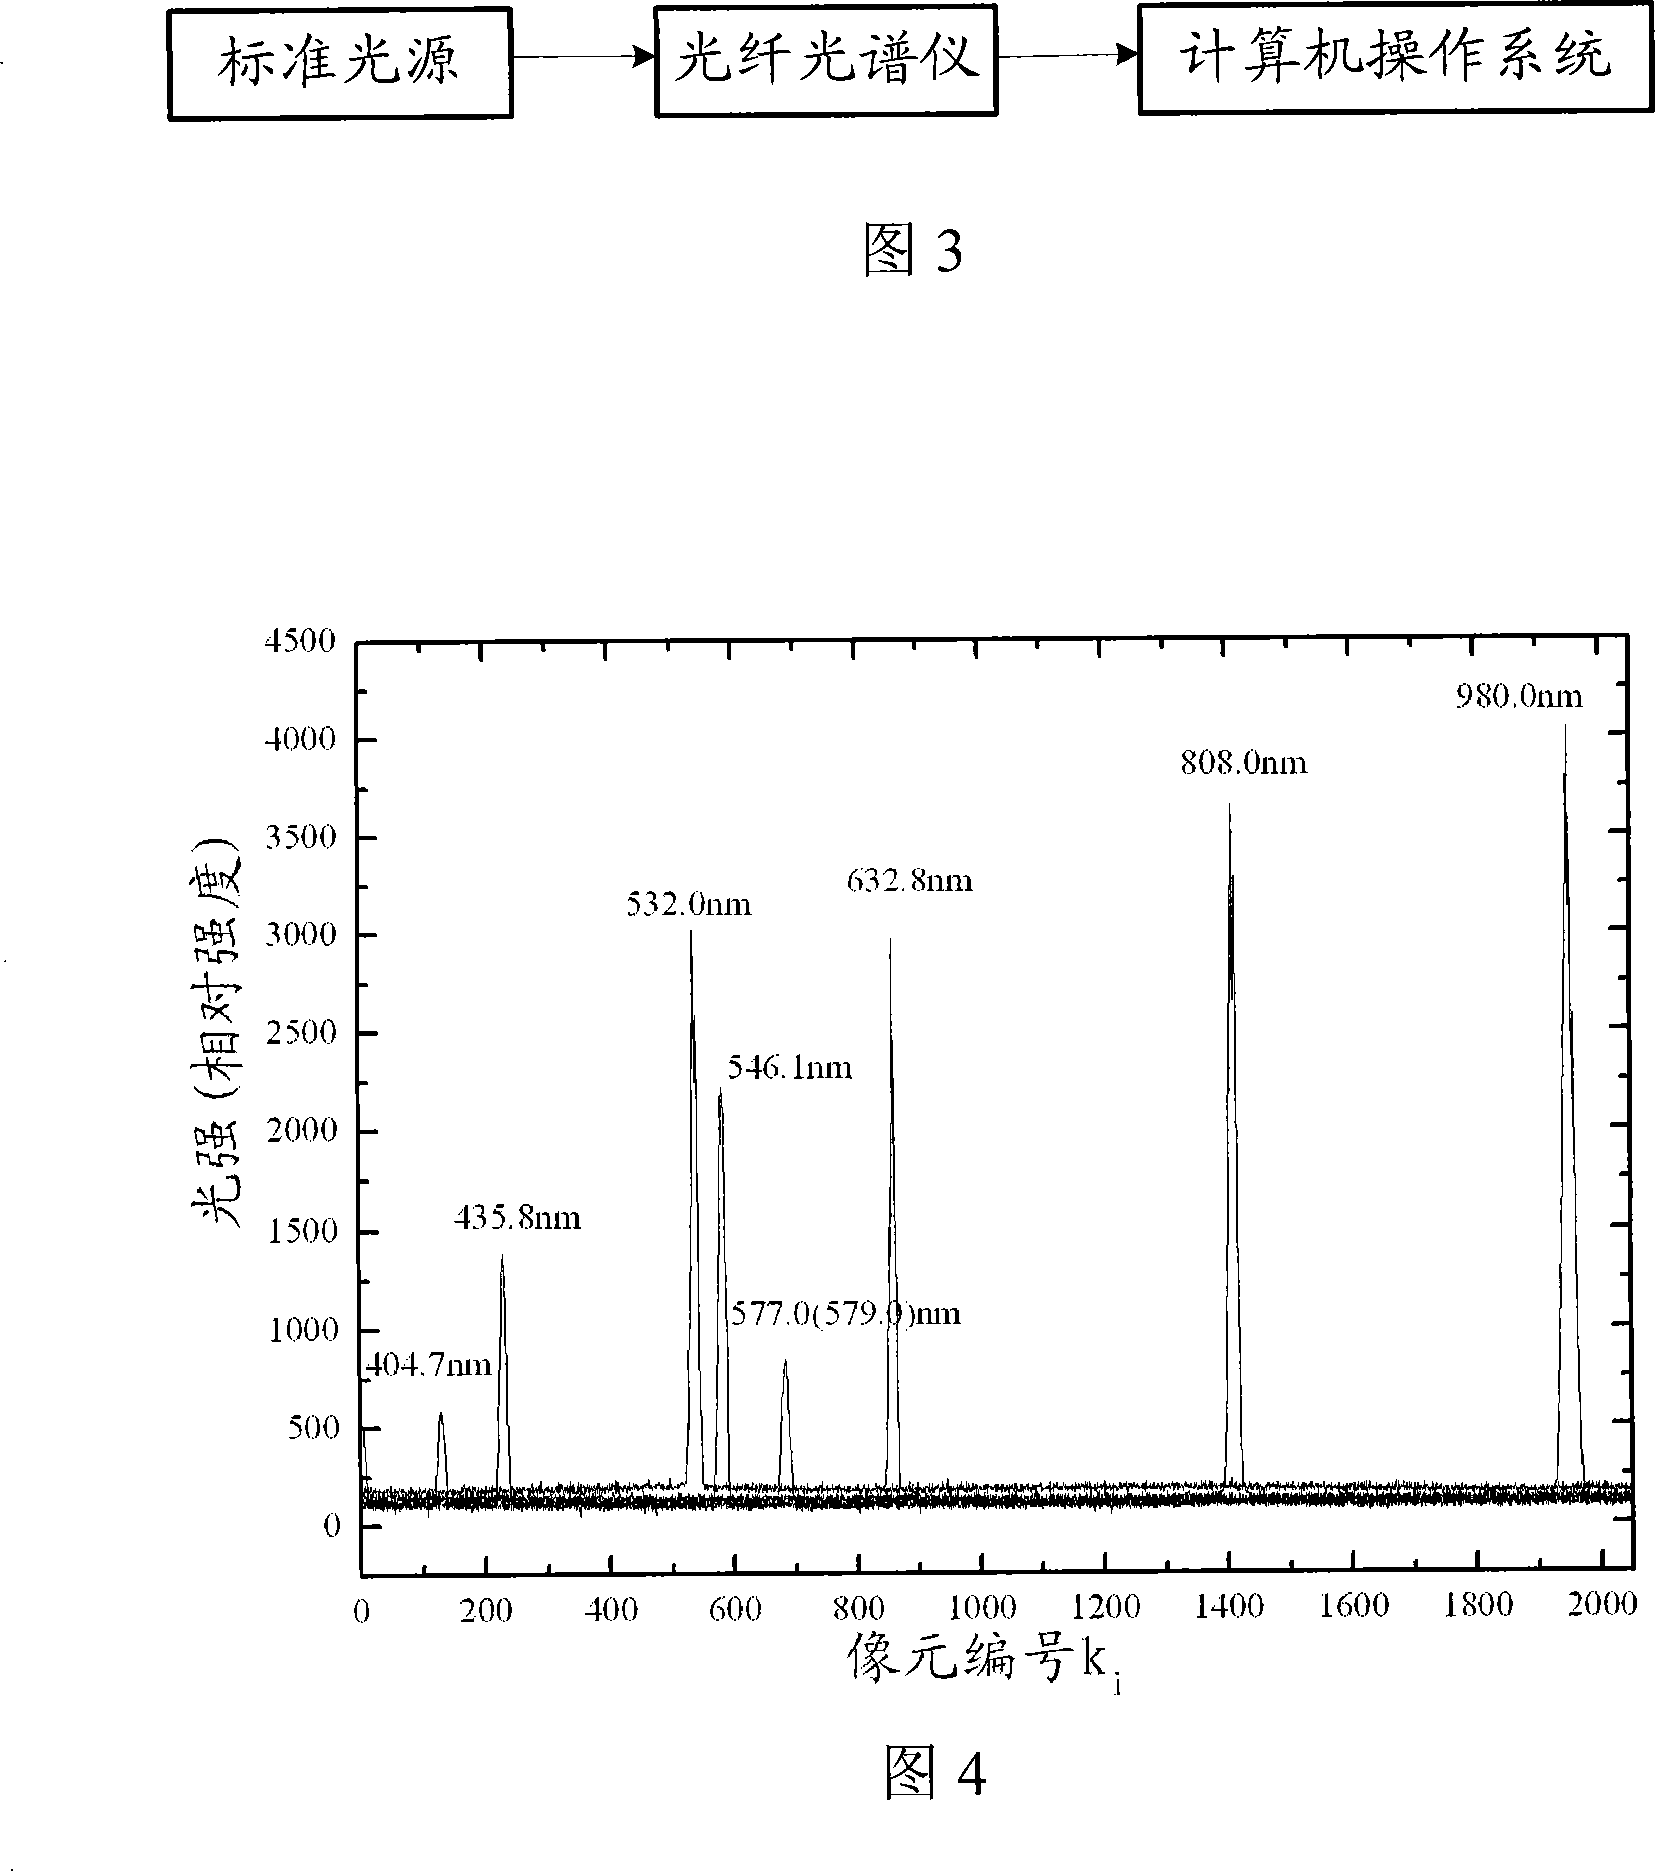 Optical fiber spectrometer wavelength calibration method